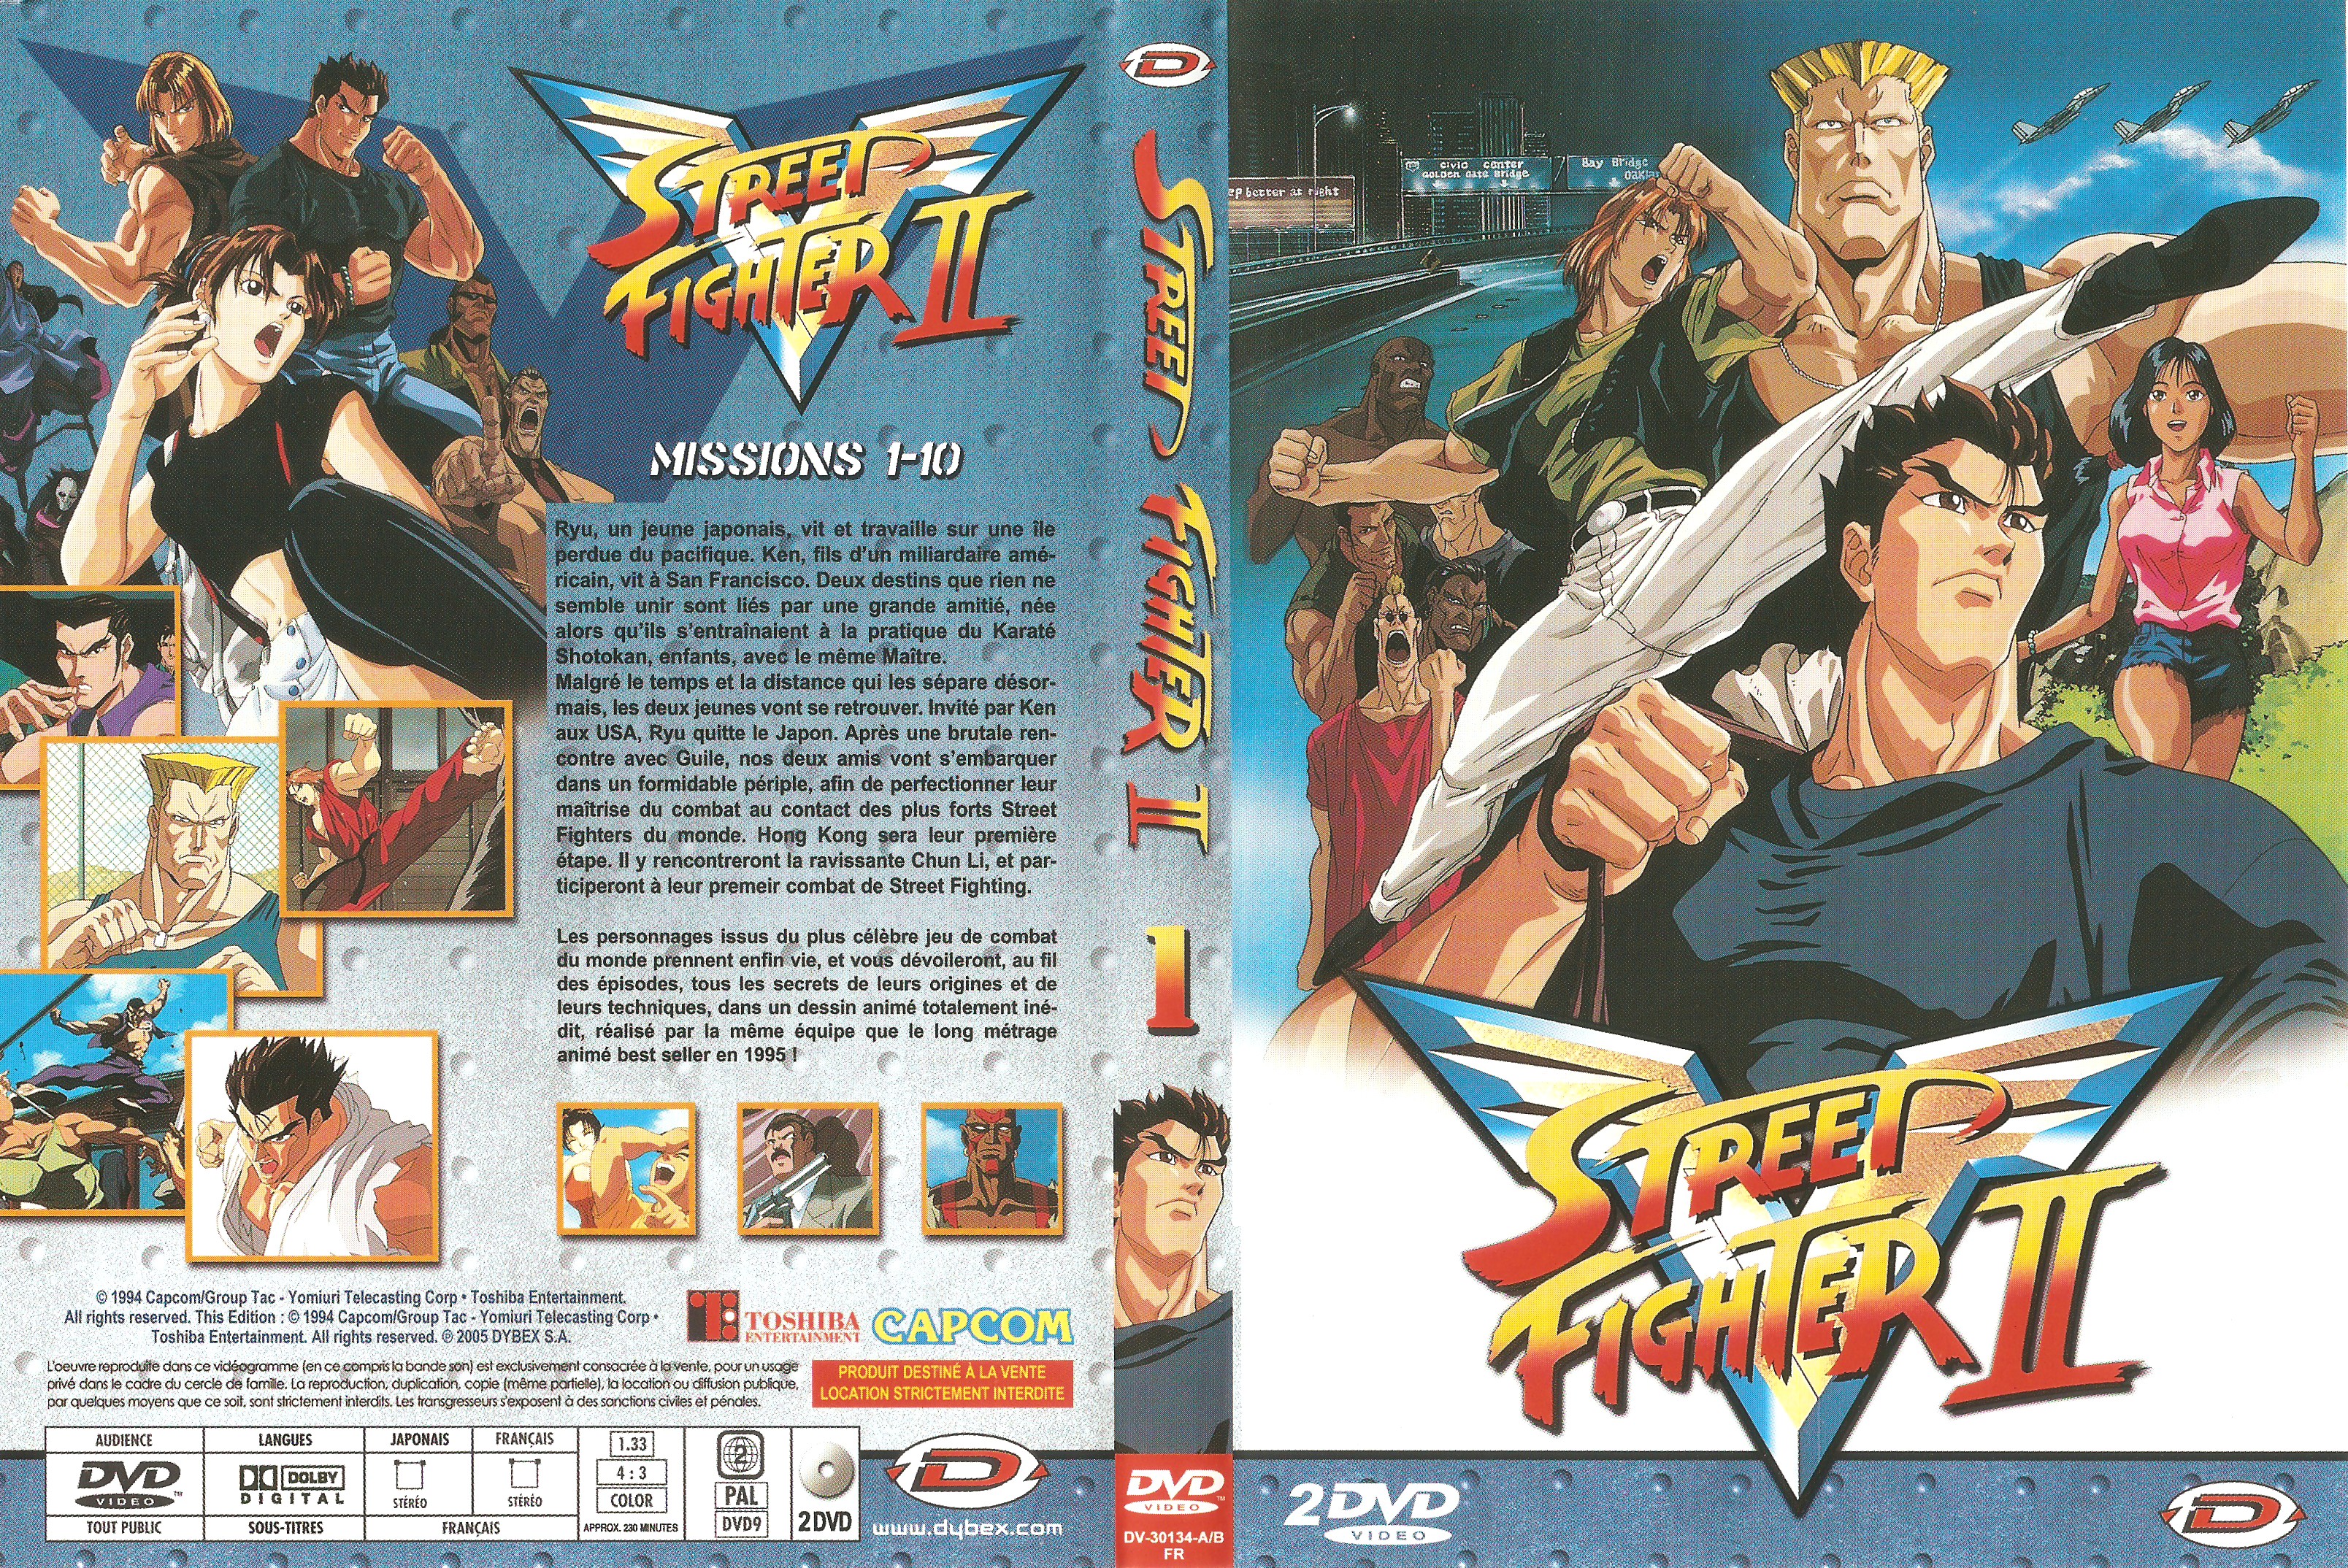 Jaquette DVD Street fighter 2 vol 1